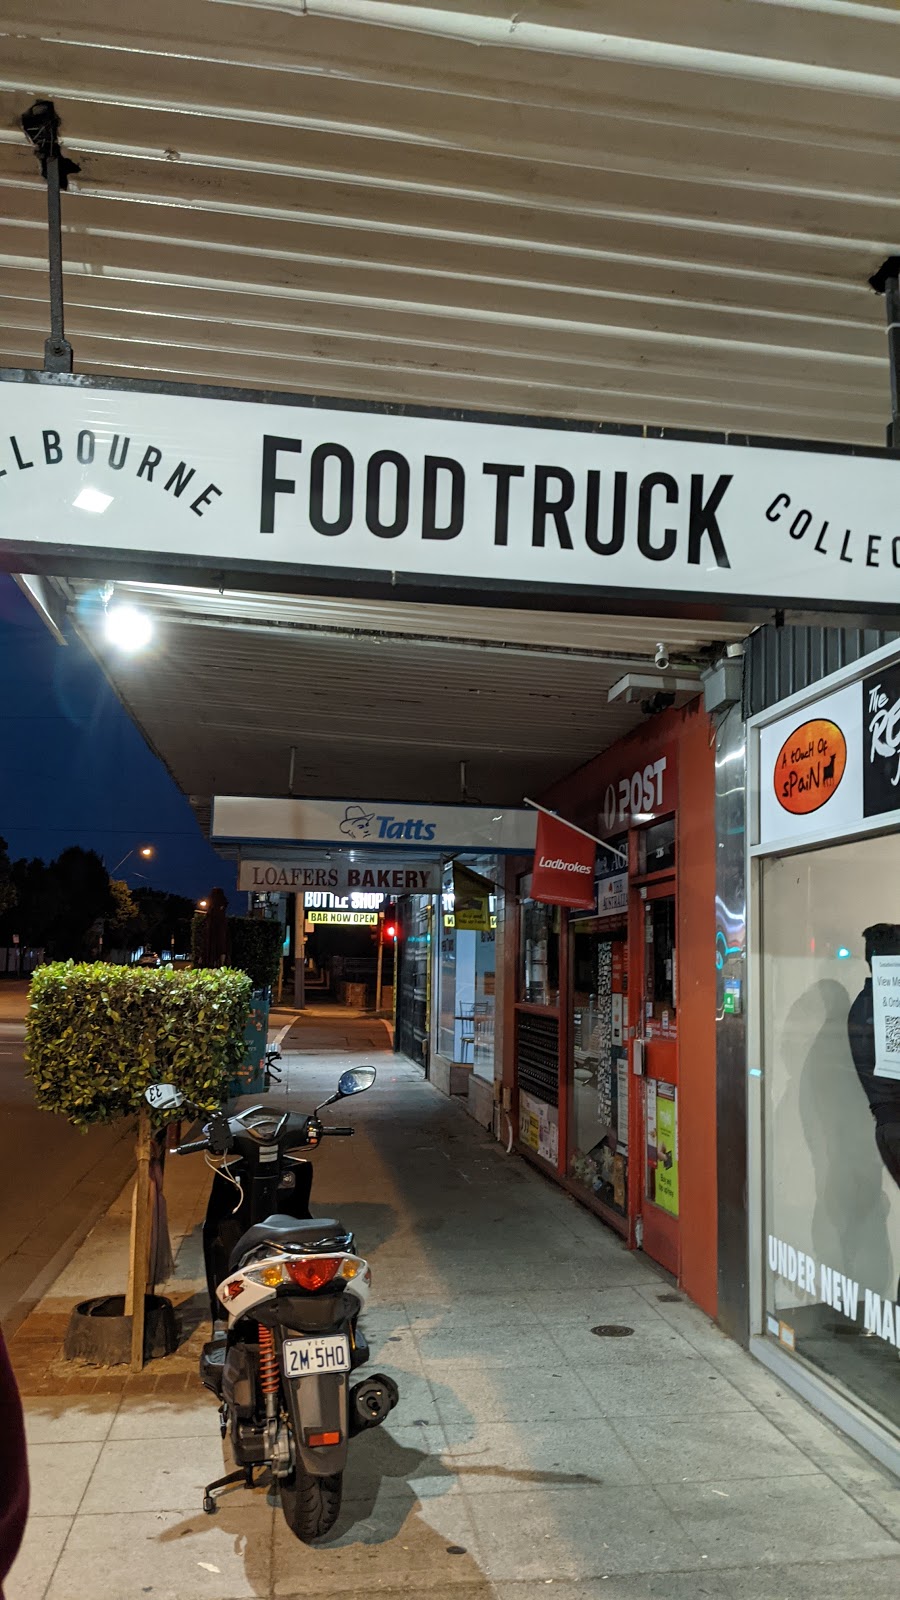 Melbourne Food Truck Collective | meal takeaway | Shop 4/84 Bemersyde Dr, Berwick VIC 3806, Australia | 0448861699 OR +61 448 861 699